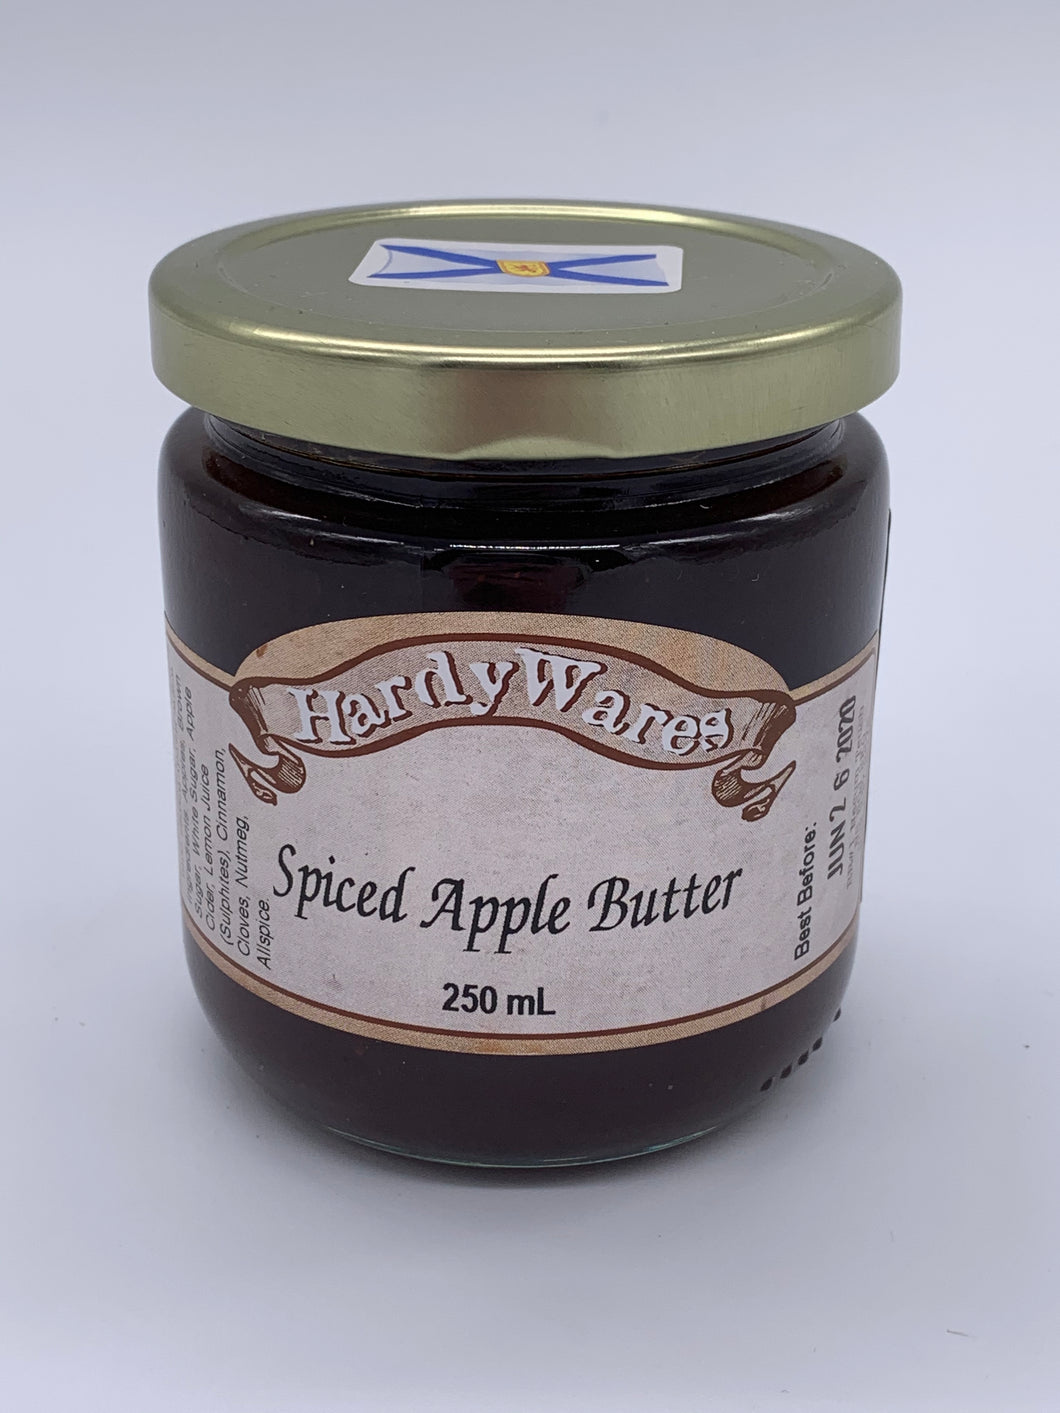 Hardywares Spiced Apple Butter